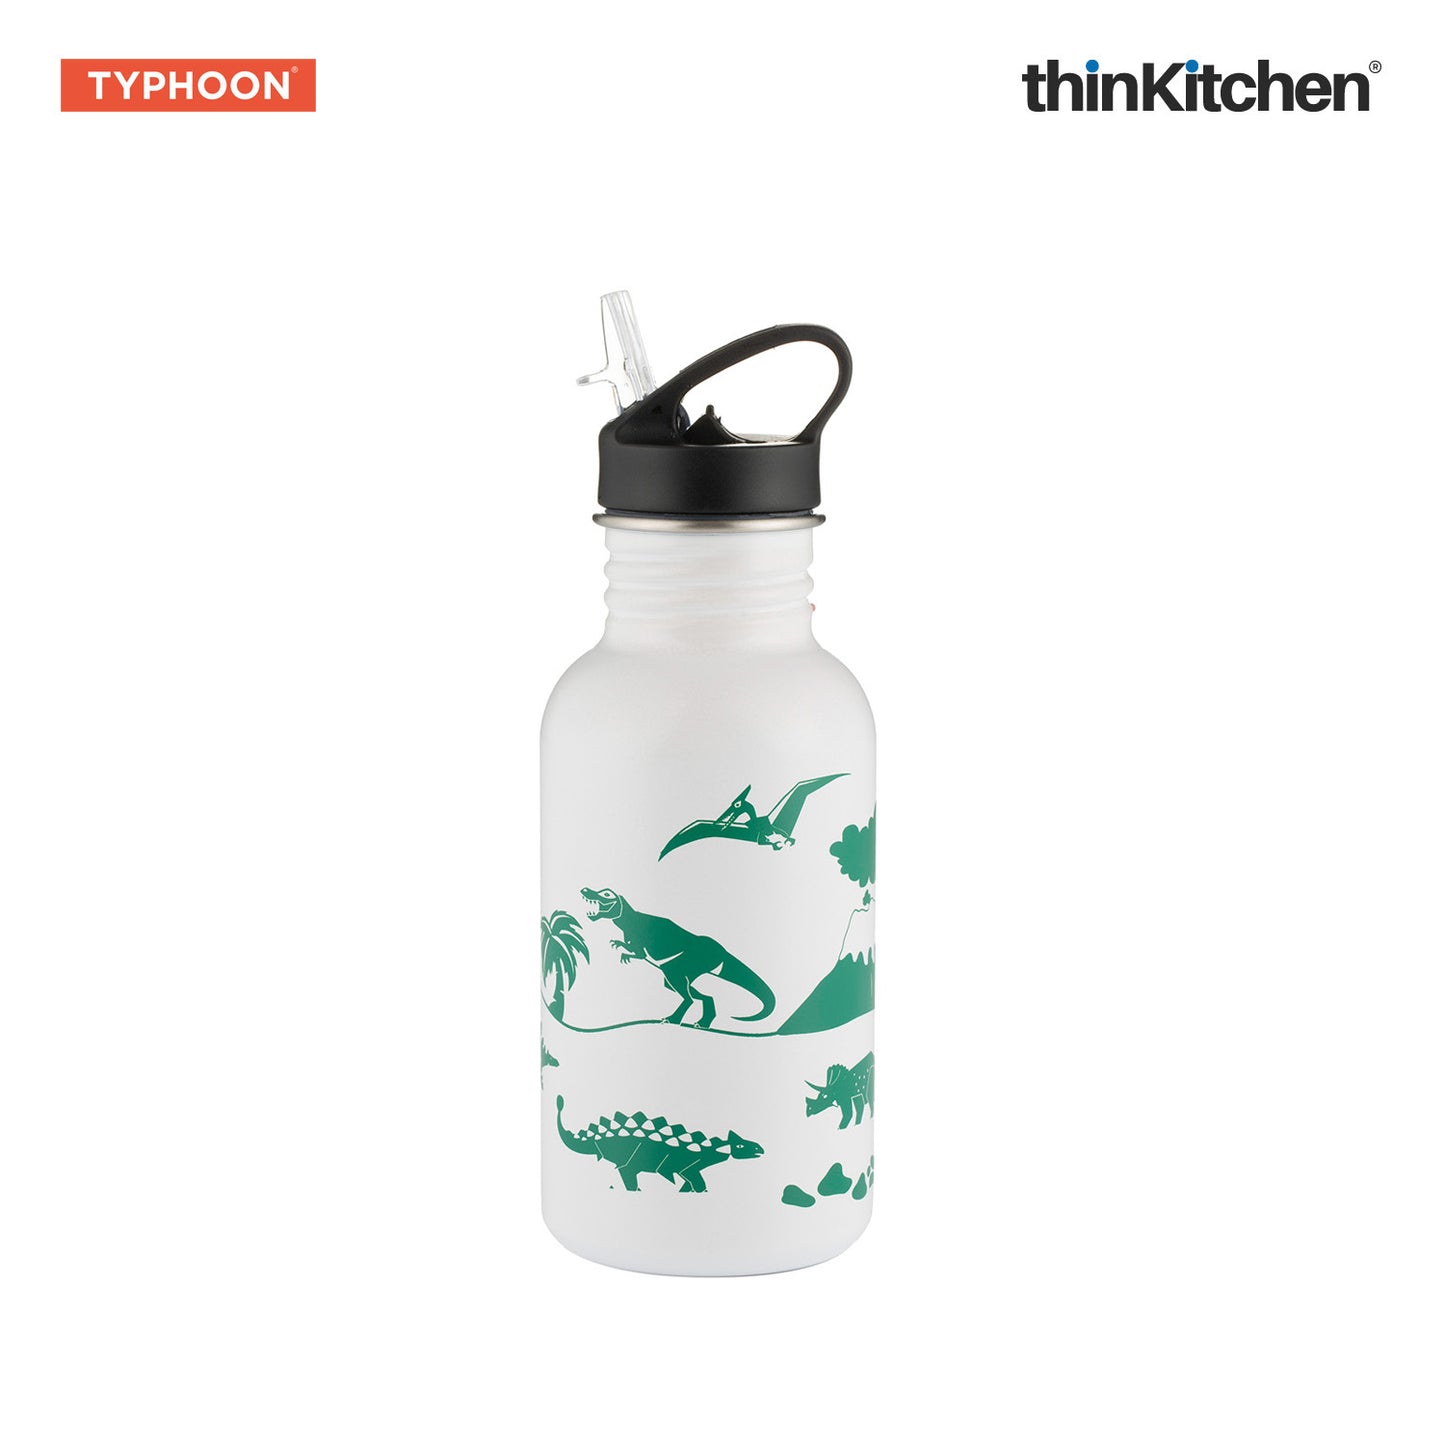 Typhoon Pure Color-change Dinosaur Bottle, 550ml